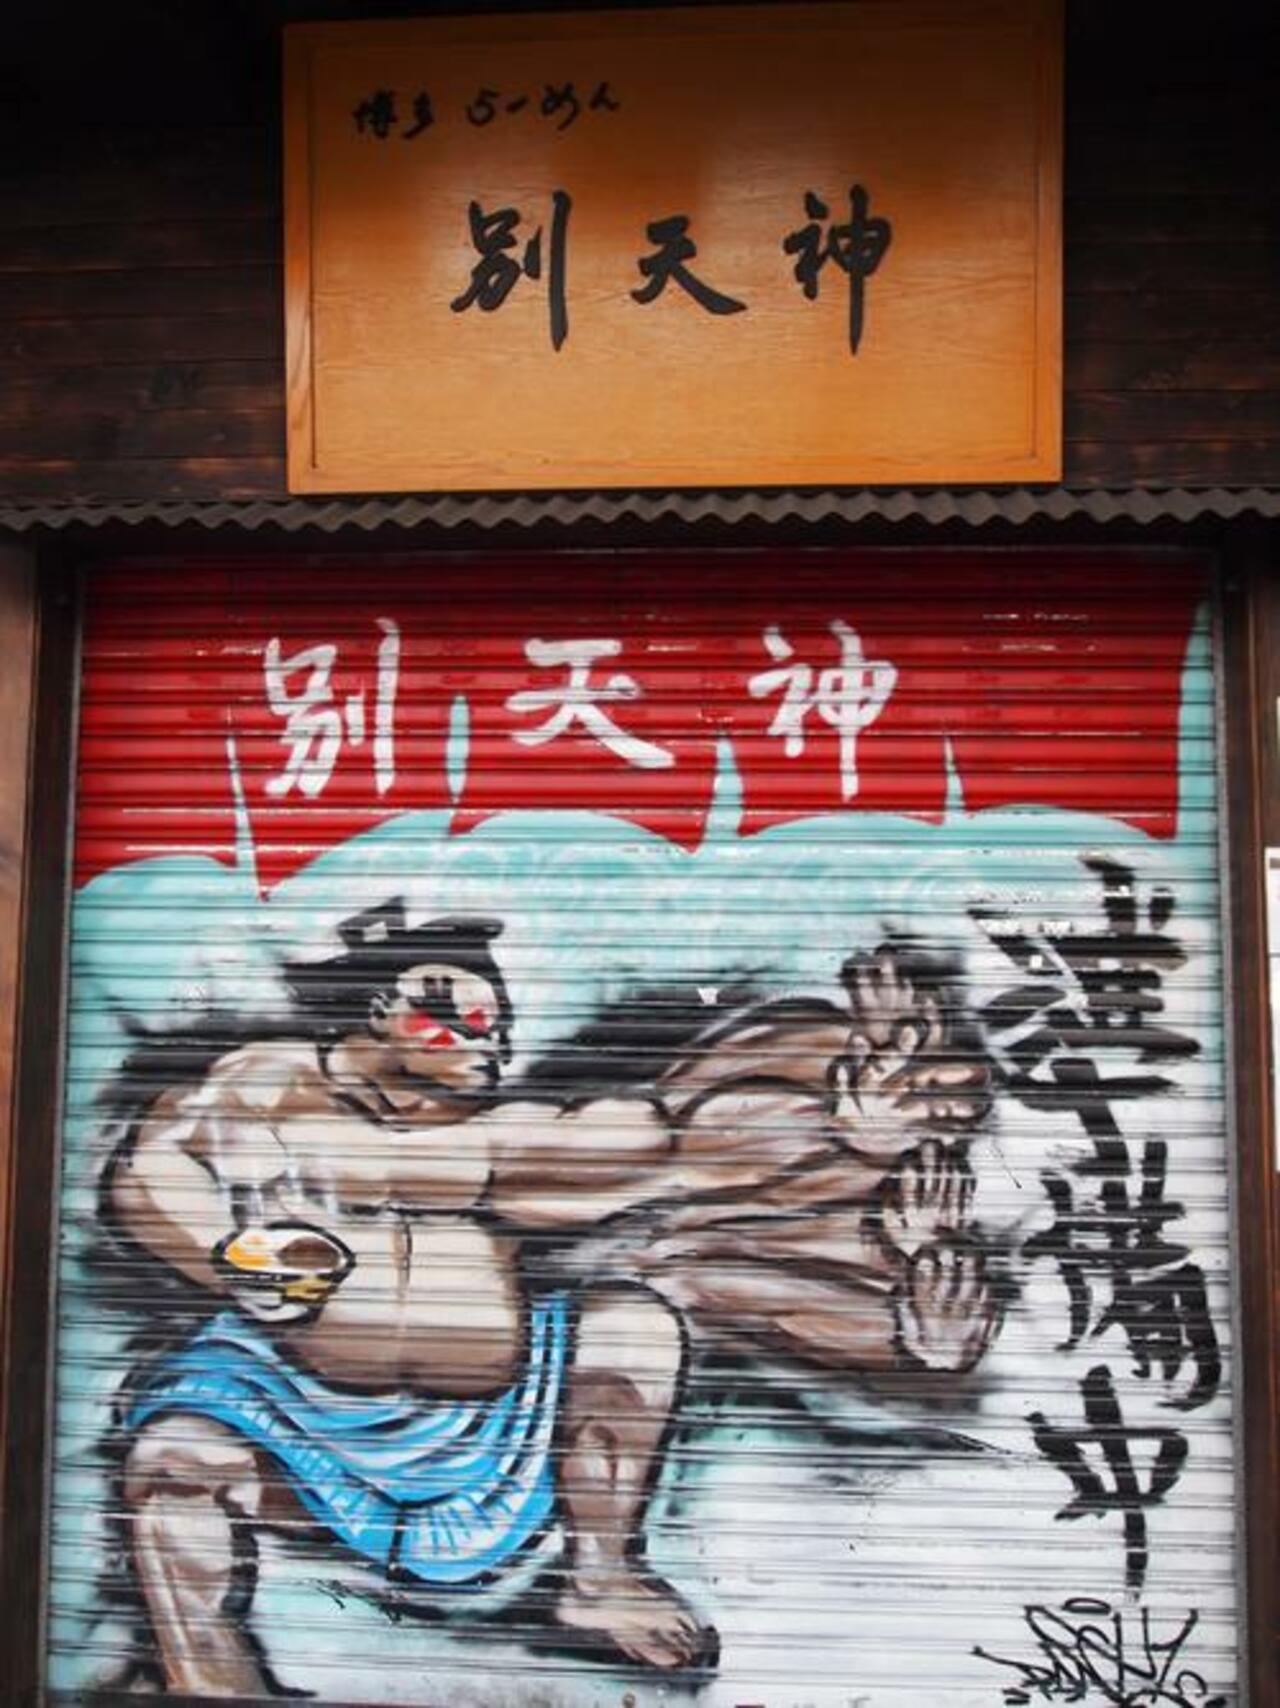 Street Fighter [Arcade Game]  #streetart #graffiti #classic #art #funky #dope . : http://t.co/ds78fh7KHg